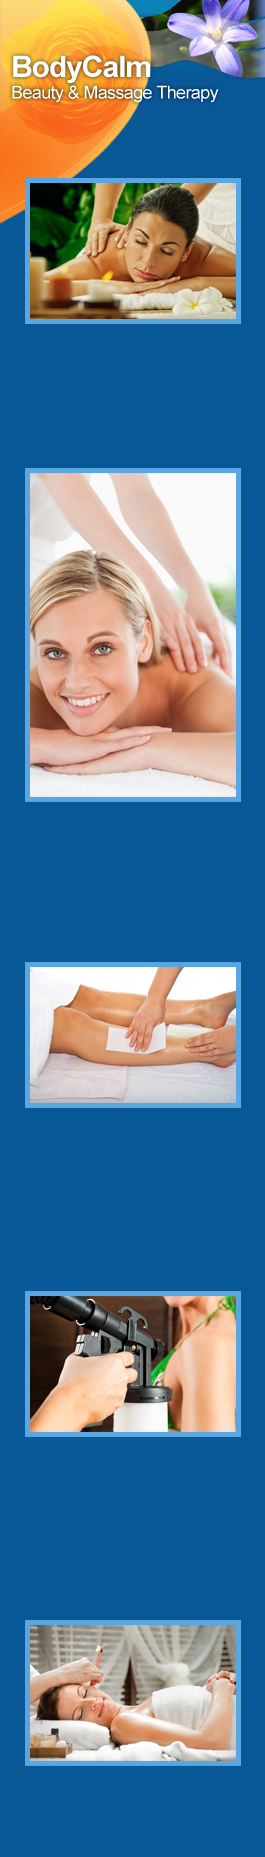 Profile picture for BodyCalm Massage Therapy